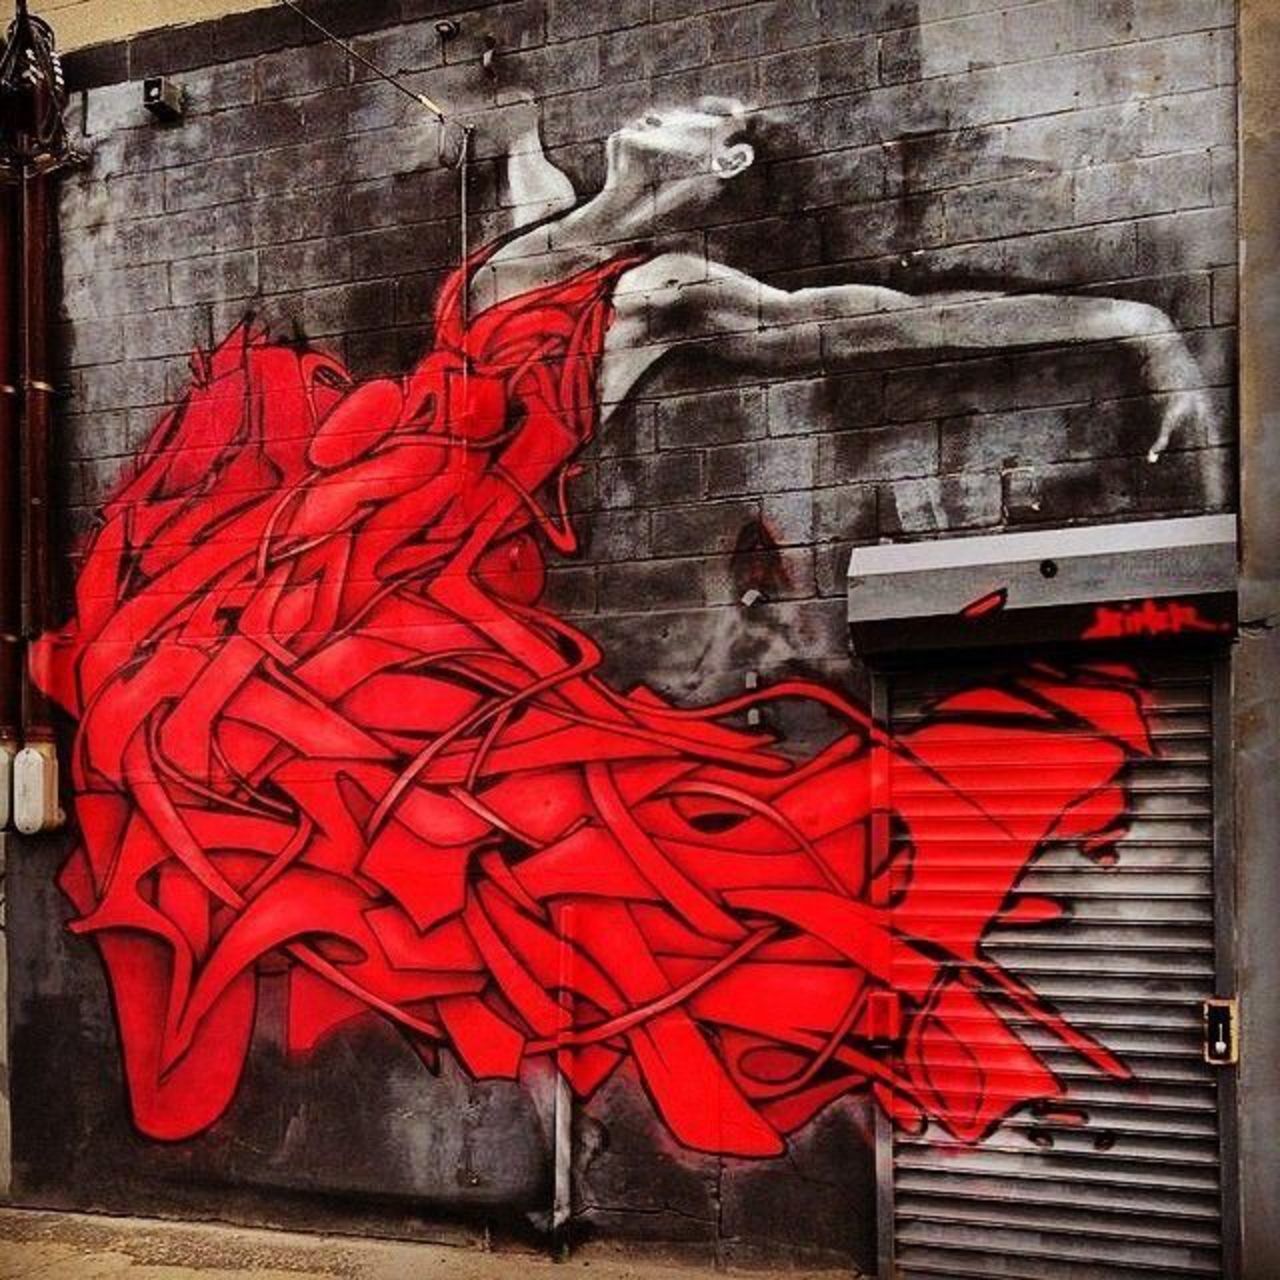 ZIMER in NYC#streetart #mural #art #graffiti https://t.co/kqvphzS1xC